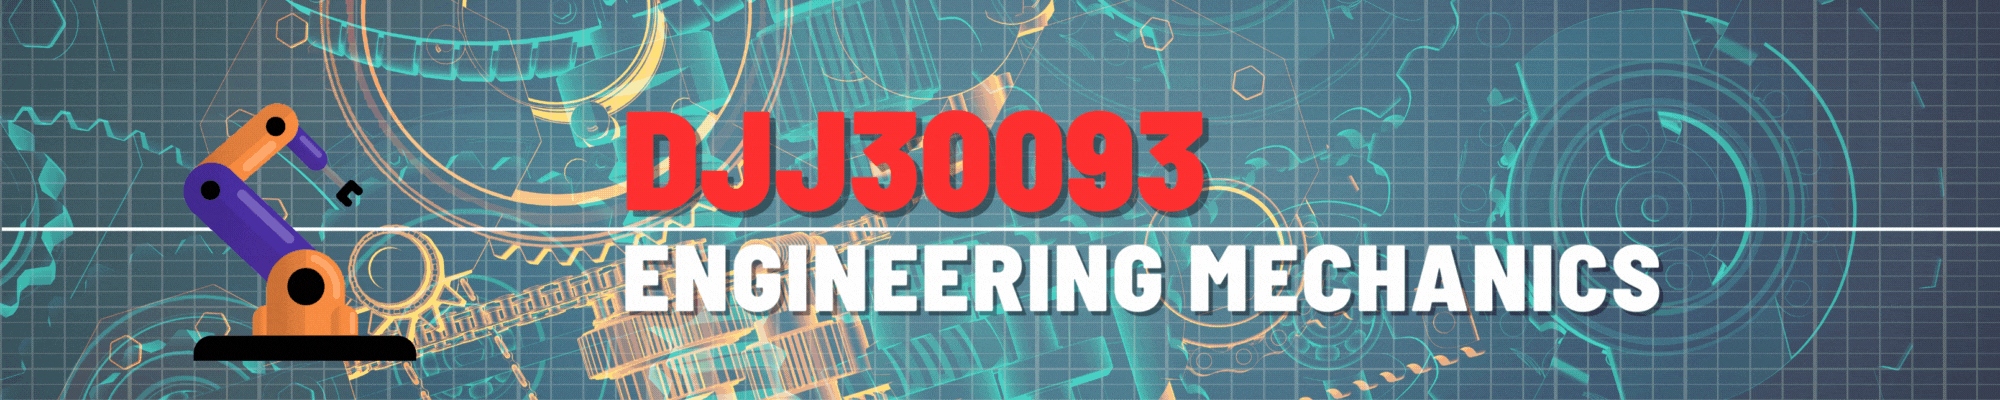 DJJ30093 ENGINEERING  MECHANICS